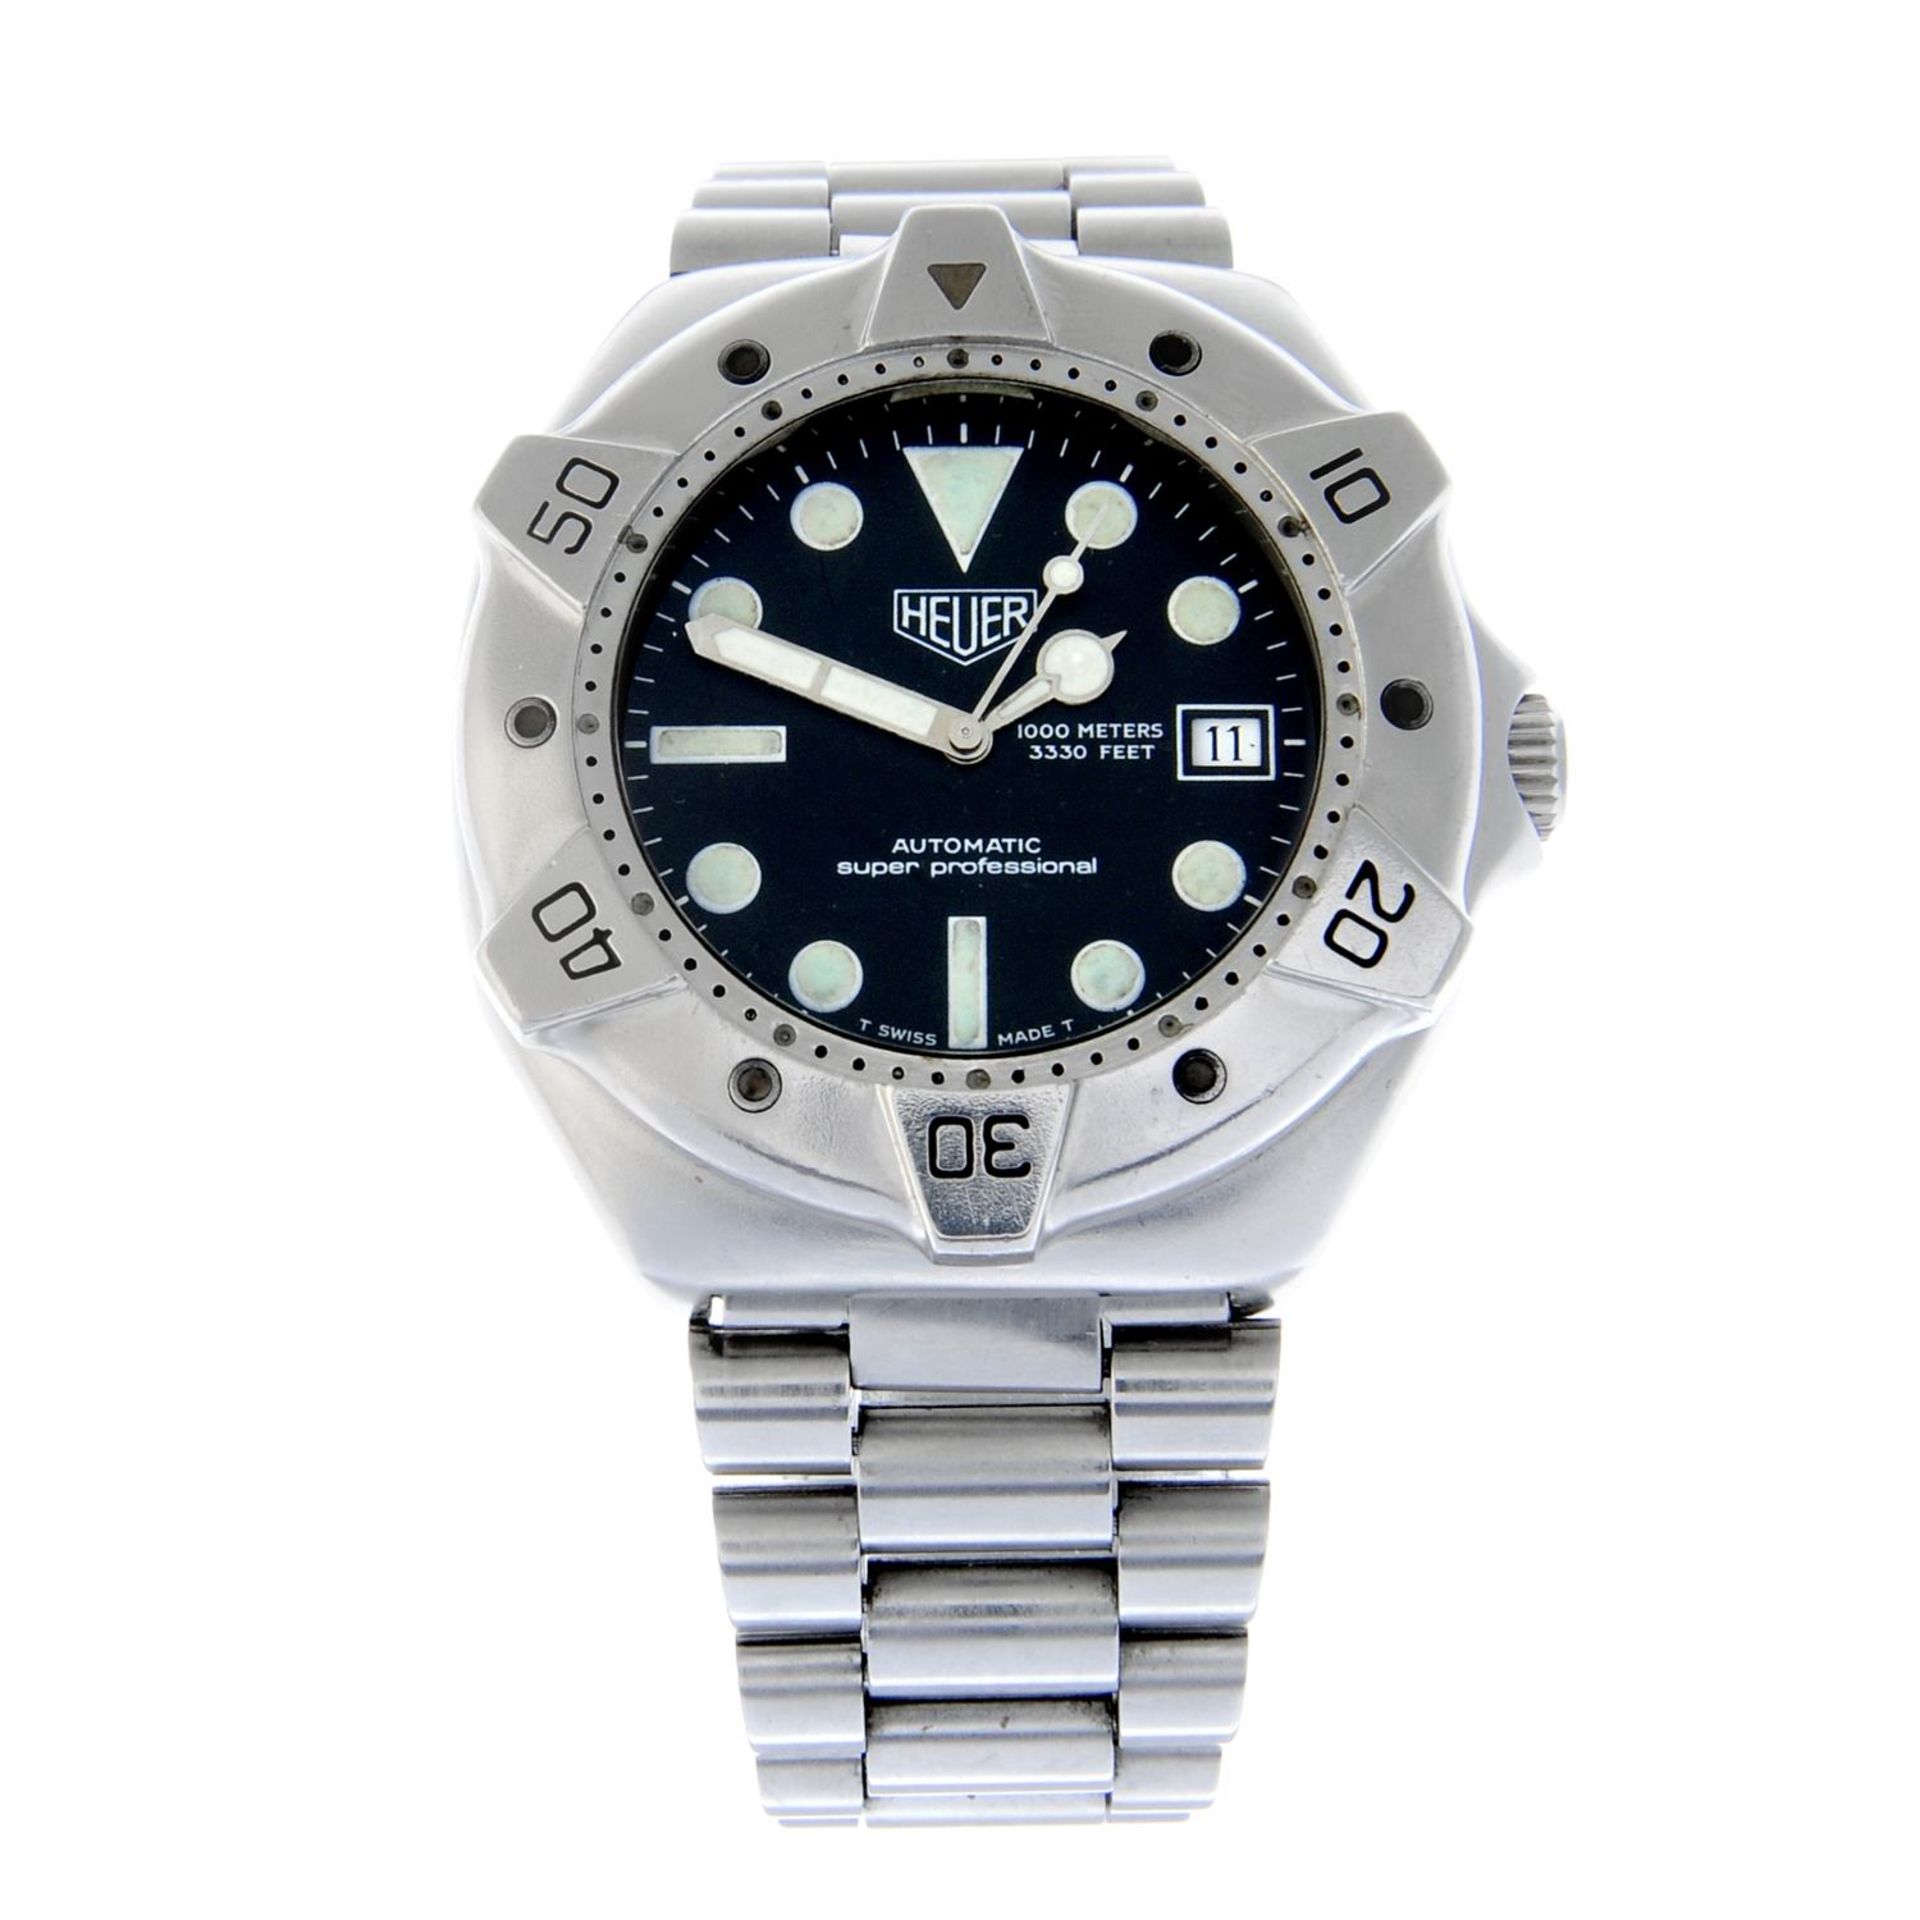 HEUER - a stainless steel Super Professional bracelet watch, 41mm